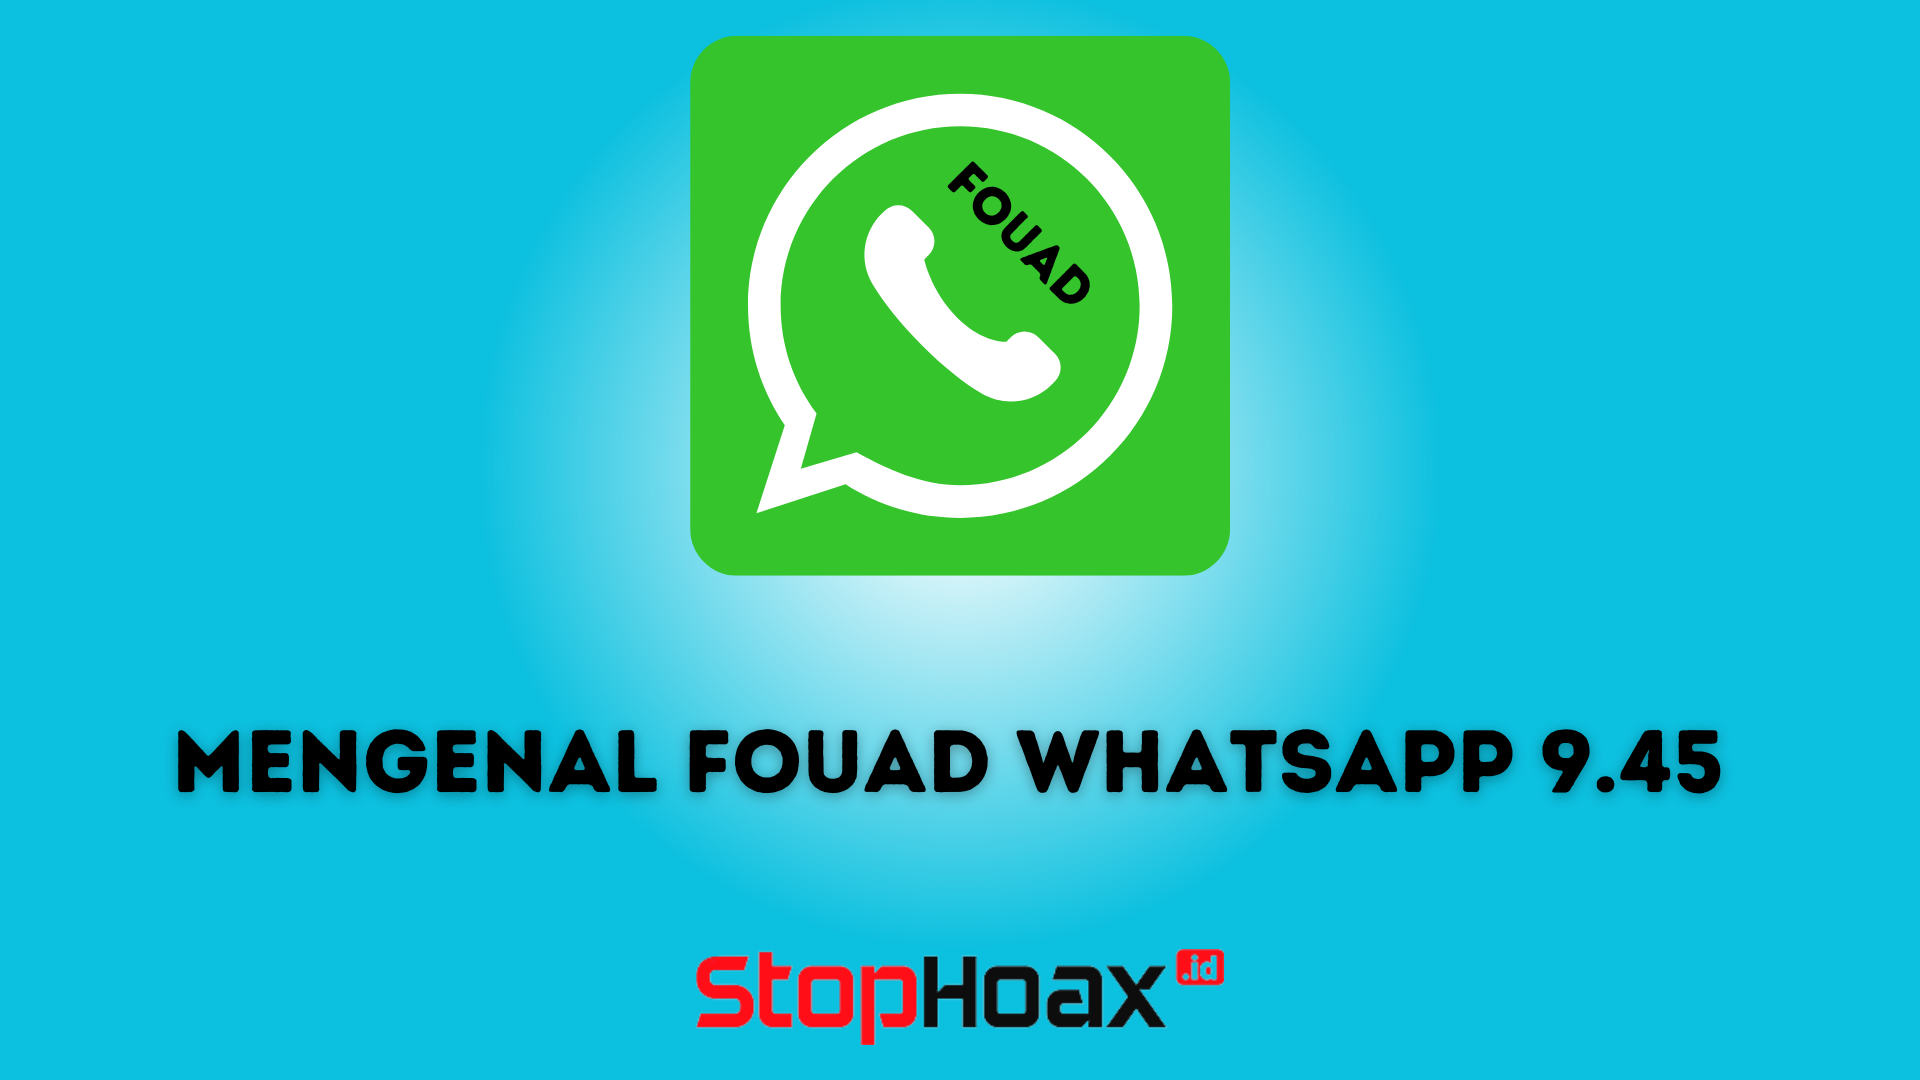 Mengenal Fouad WhatsApp 9.45 Aplikasi Chat yang Lebih Terpercaya di Android